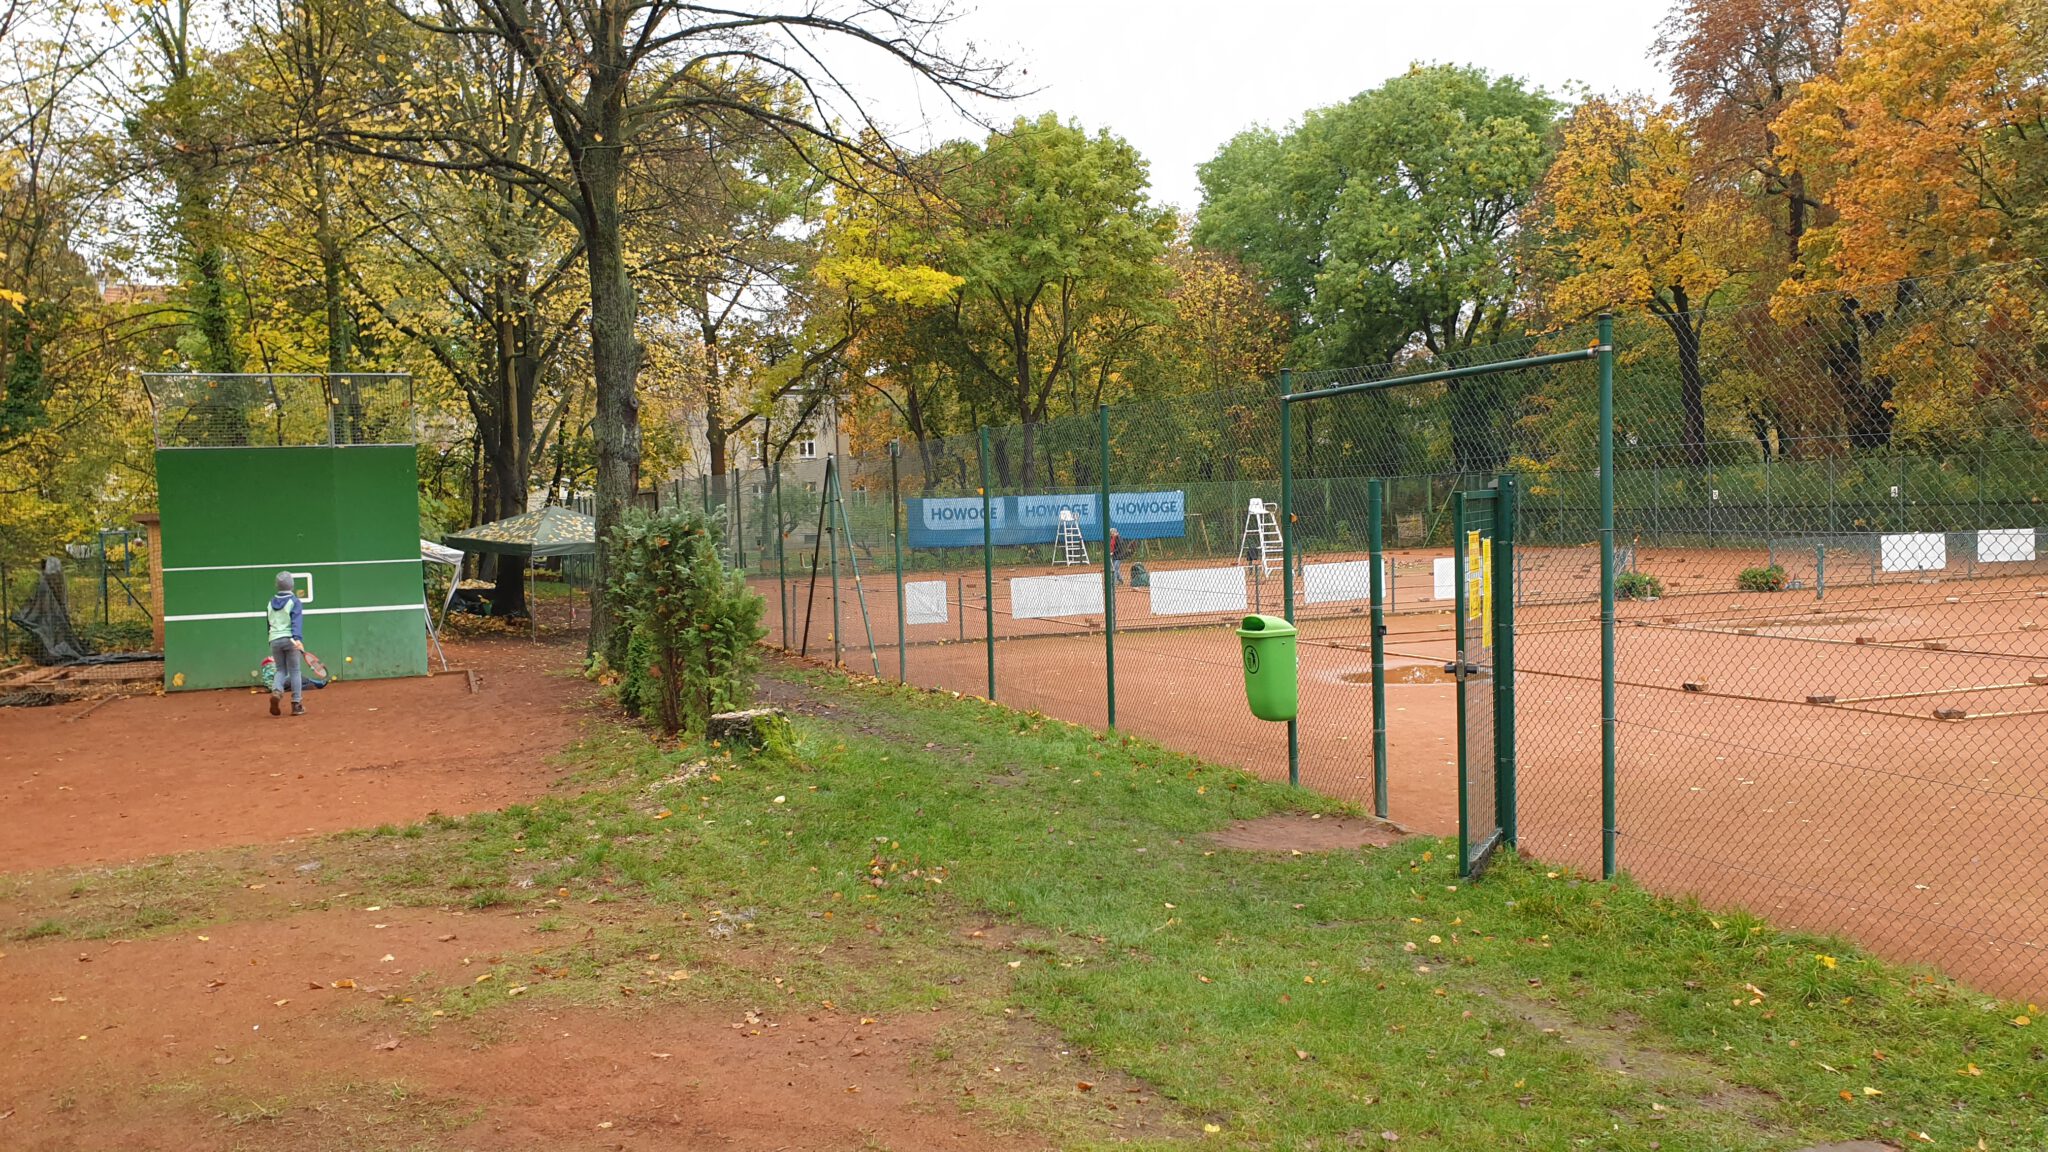 Lichtenberger Tennisclub